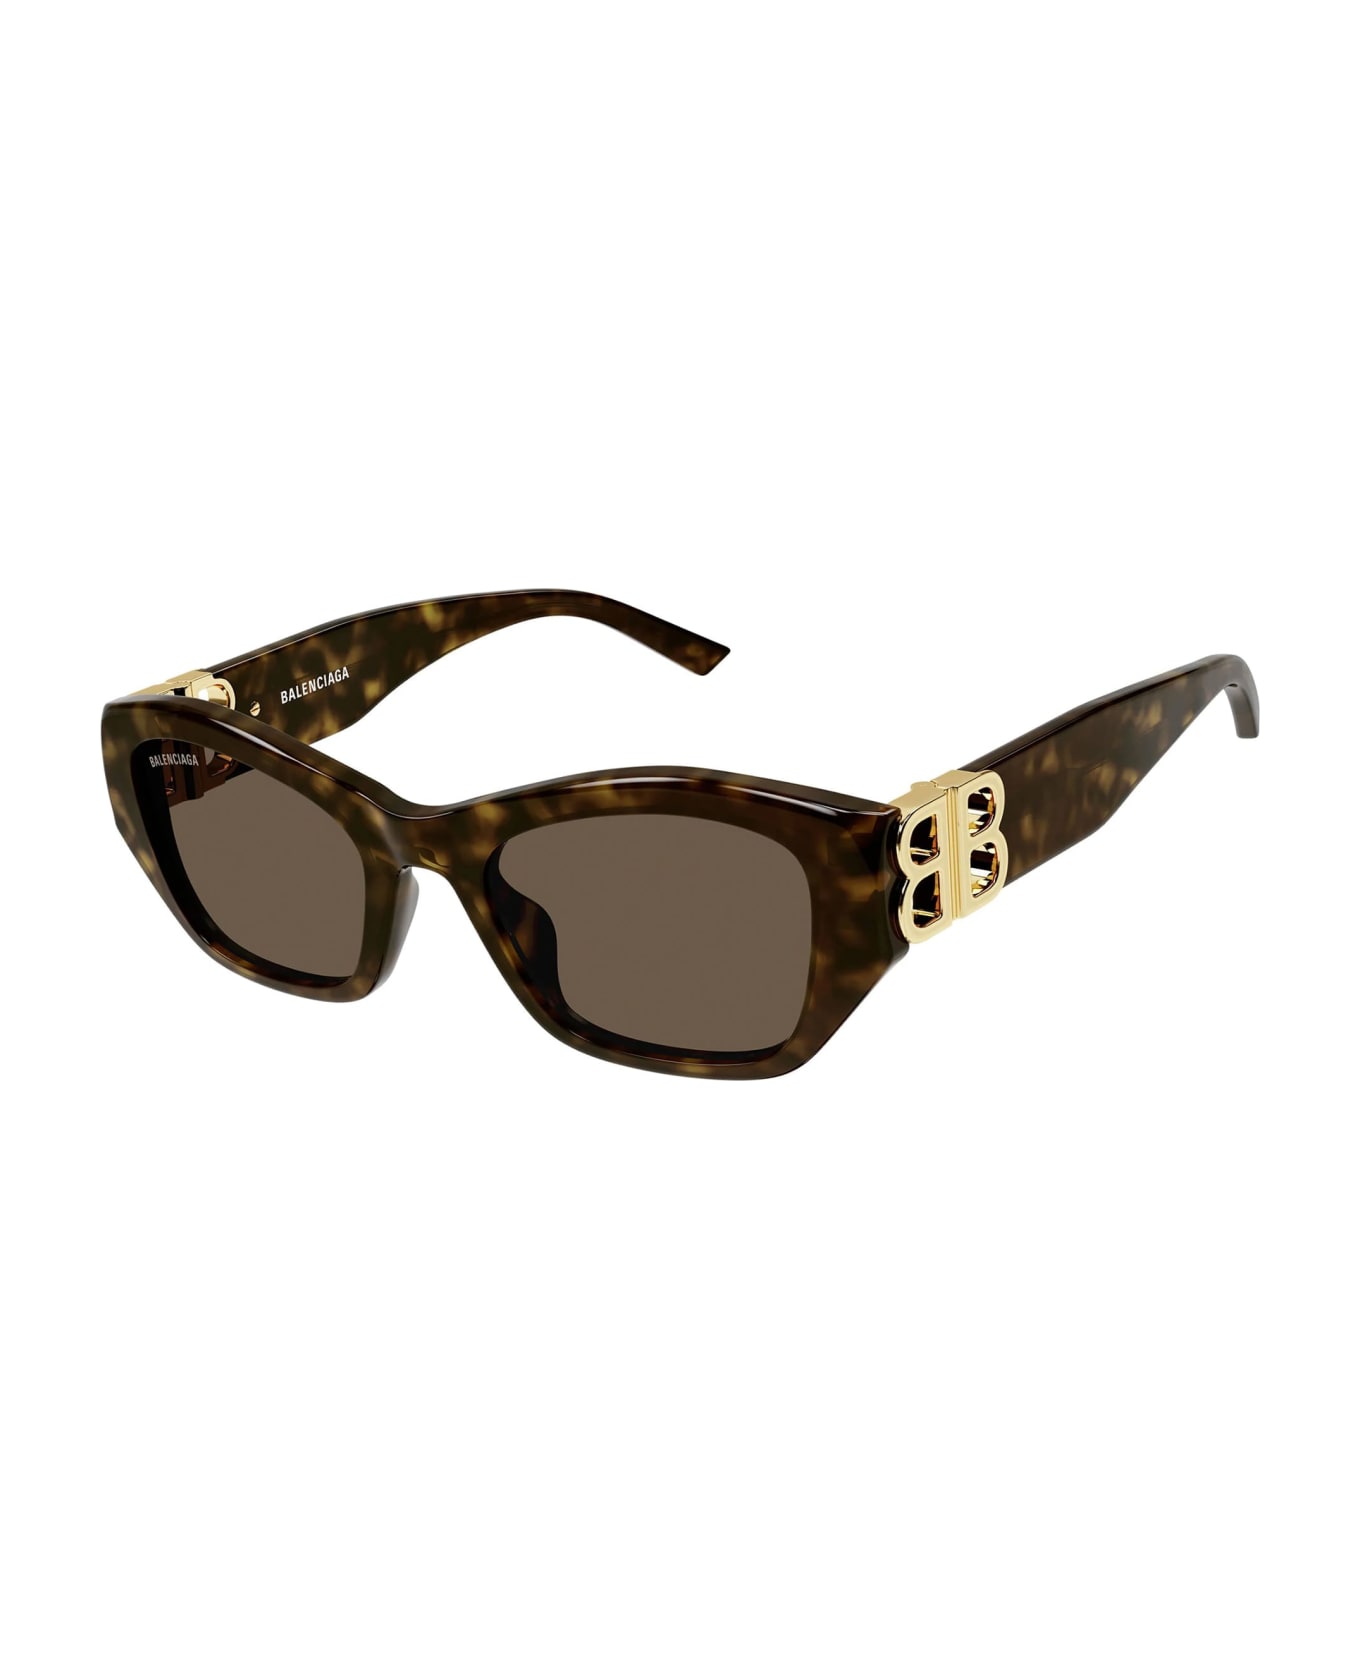 Balenciaga Eyewear Bb0311sk-002 - Tortoise Sunglasses - Tortoise